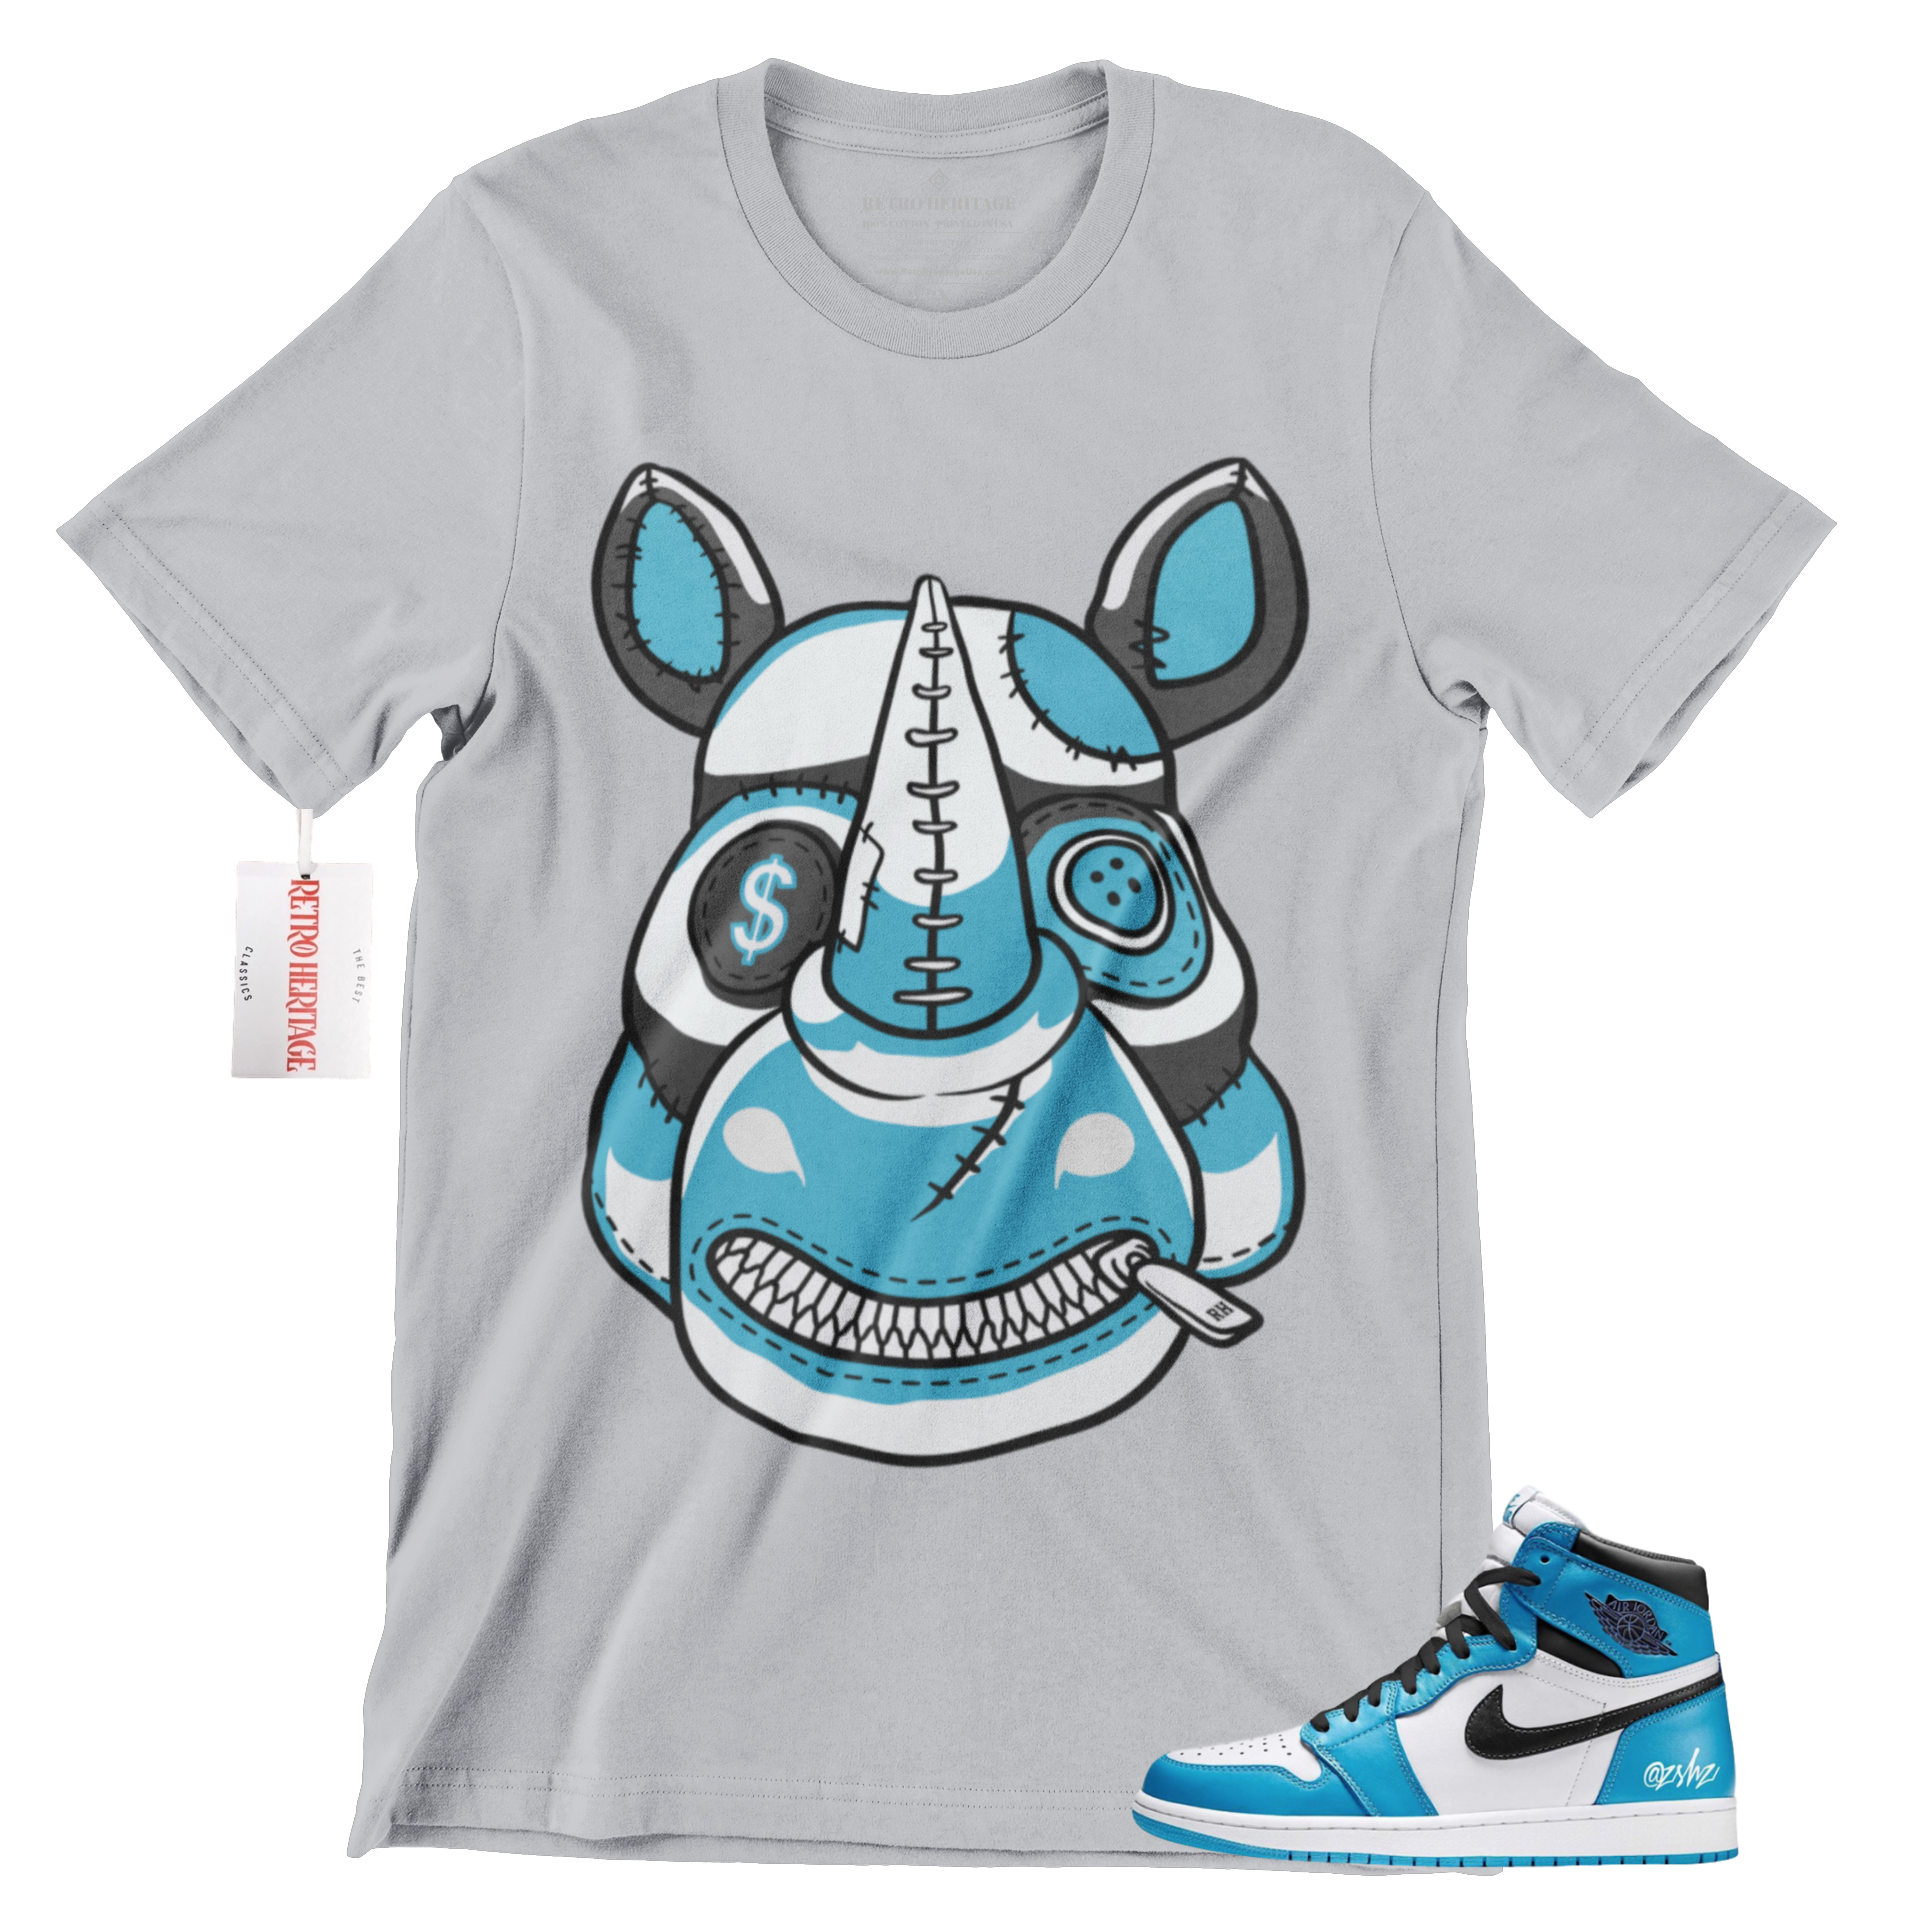 Air Jordan Brand 1 Men's Sportswear T-Shirt Deep Royal Blue/White  908007-455 